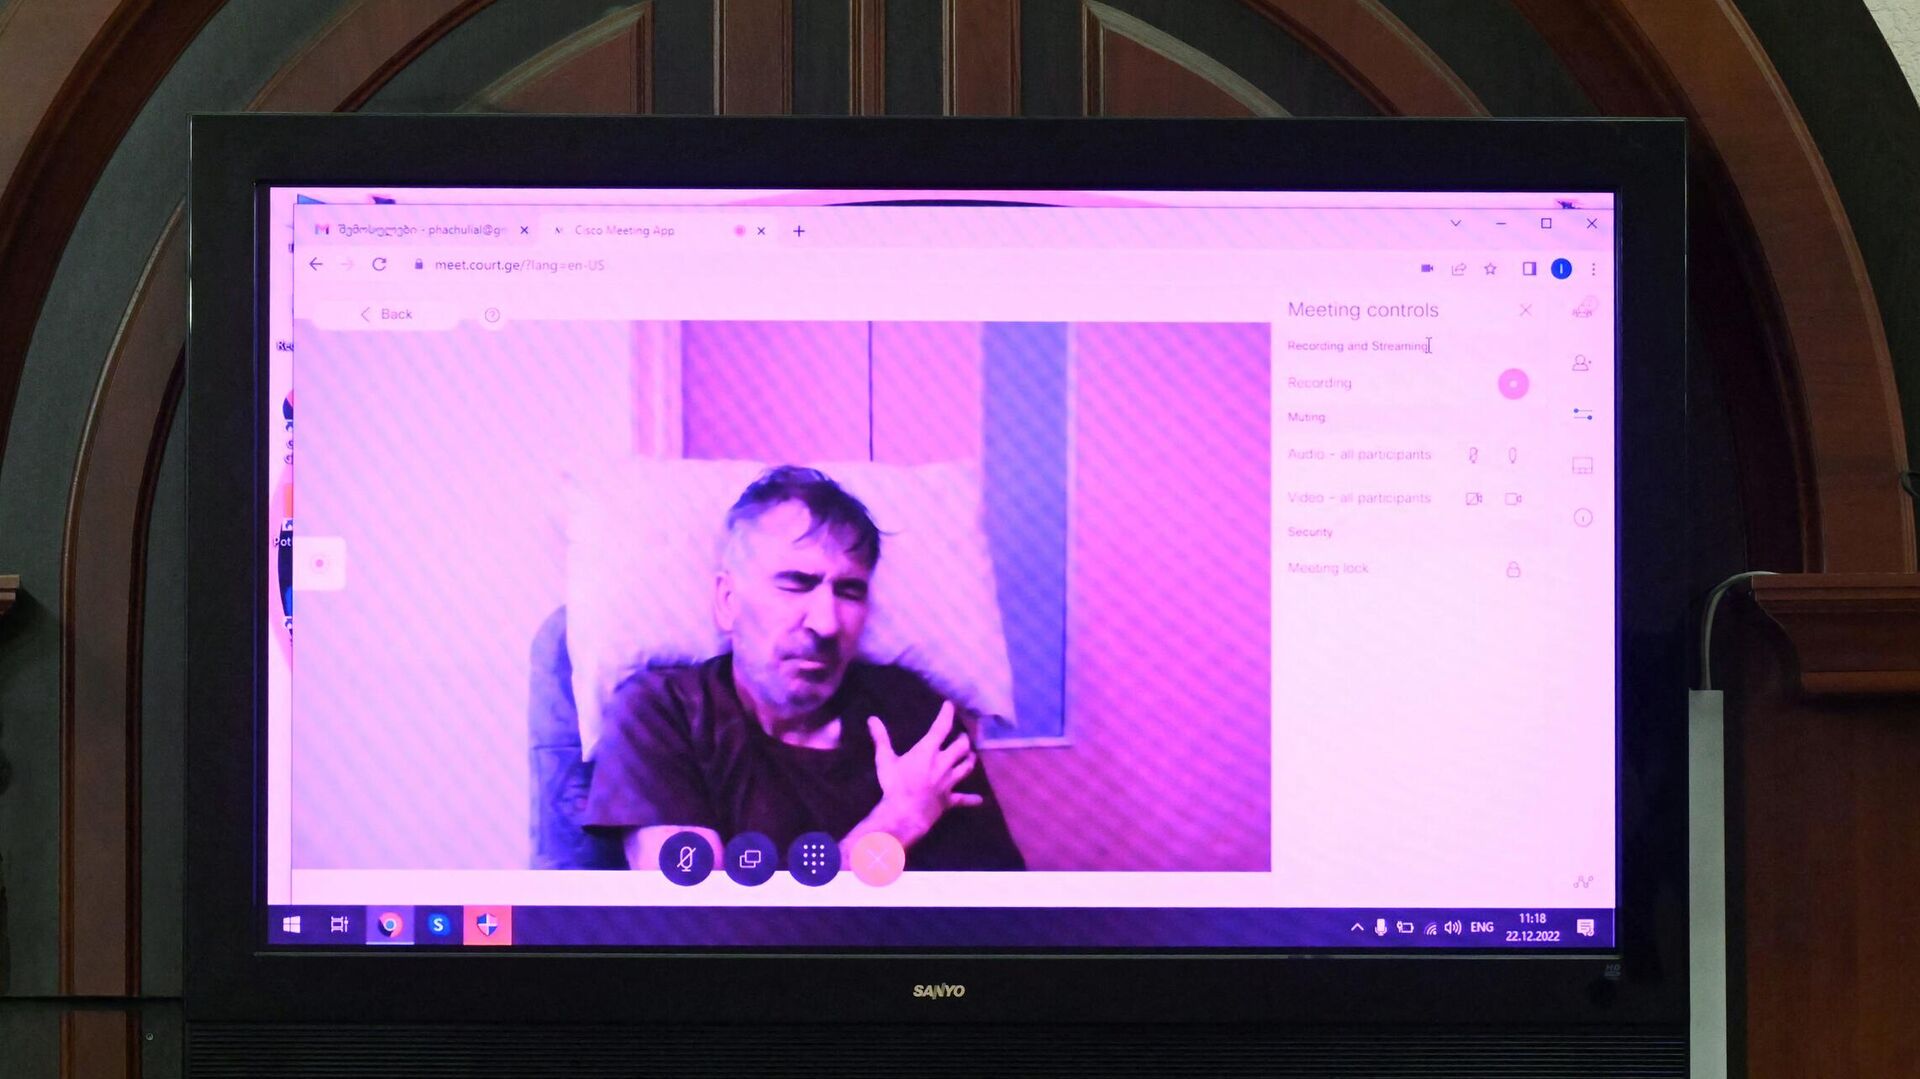 Михаил Саакашвили на экране монитора во время заседания суда в Тбилиси. 22 декабря 2022 - РИА Новости, 1920, 22.12.2022